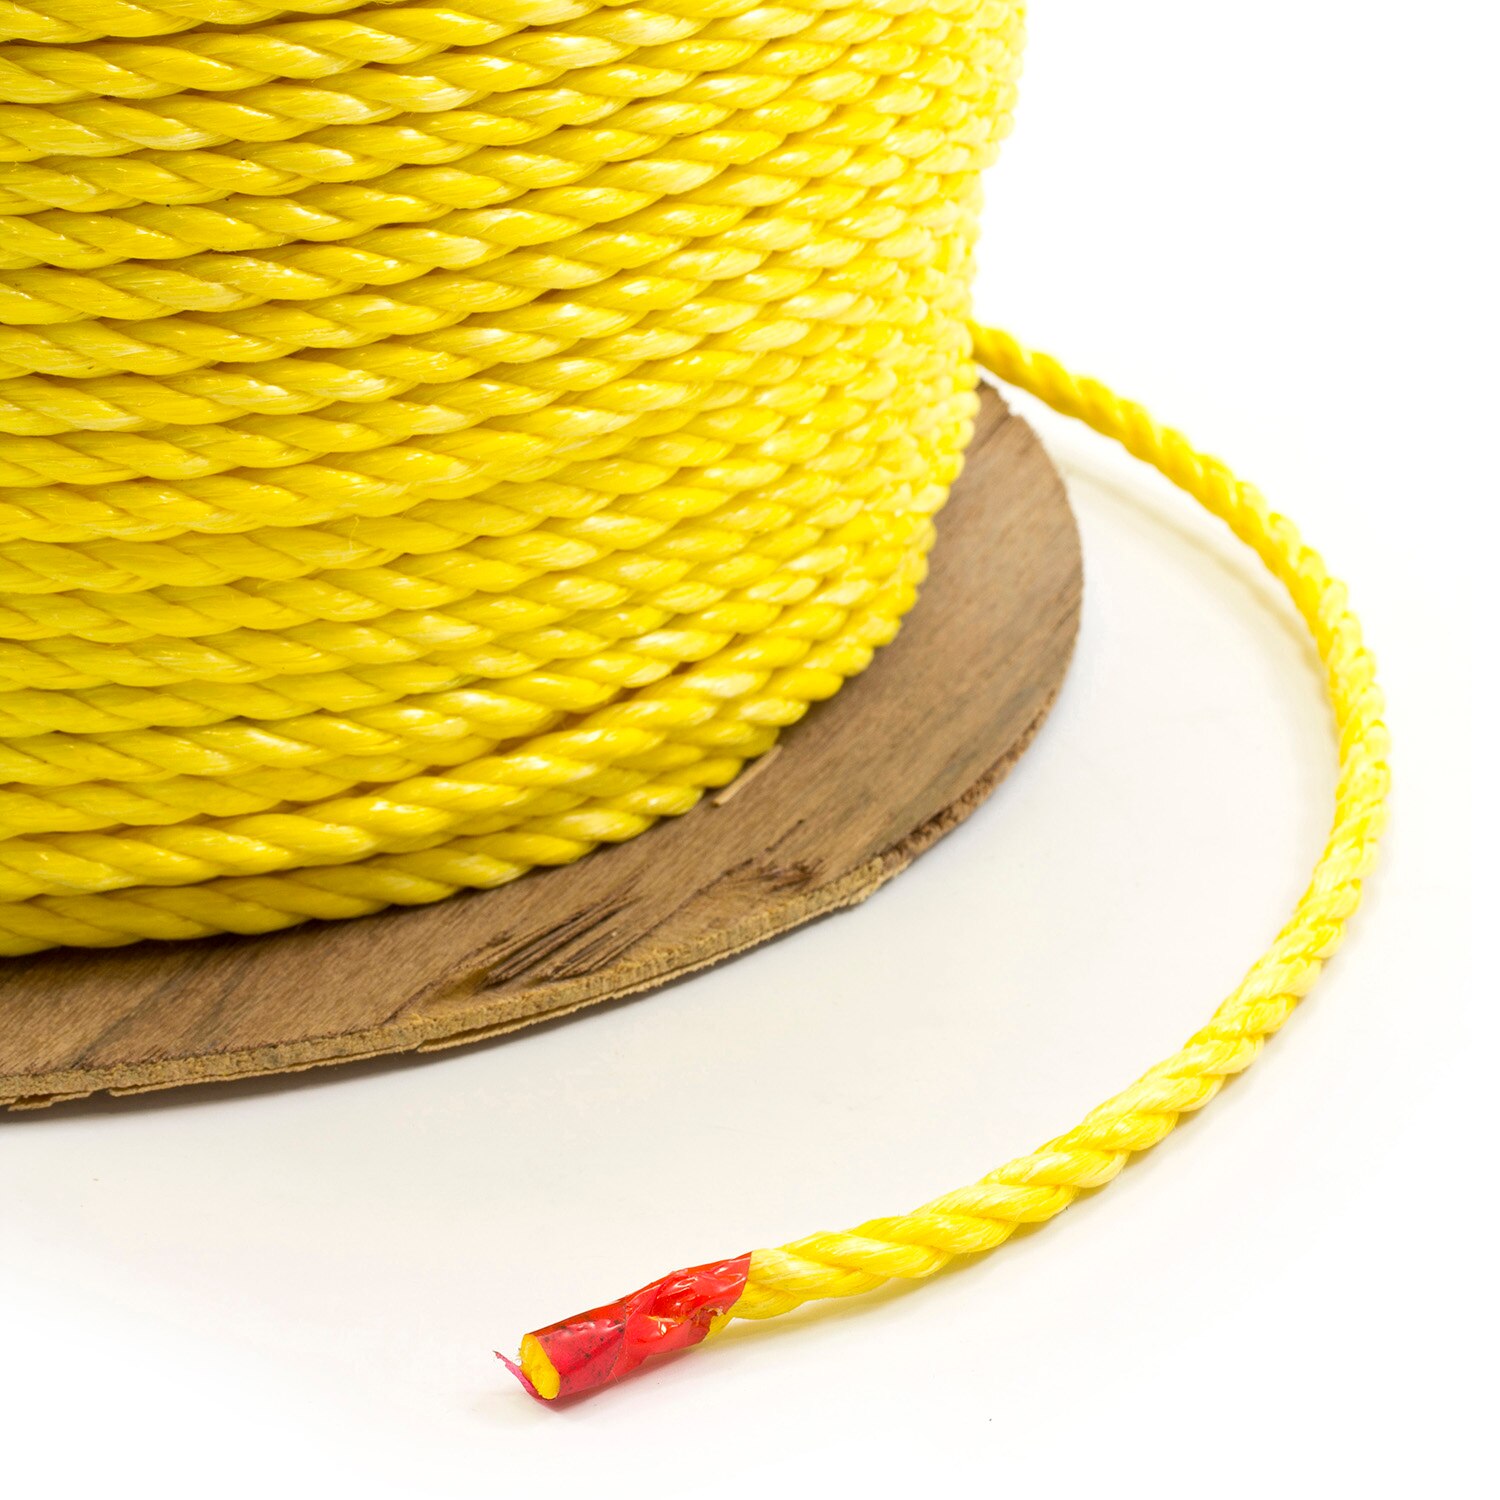 3-Strand Polypropylene Rope 5/16 x 1200' Yellow